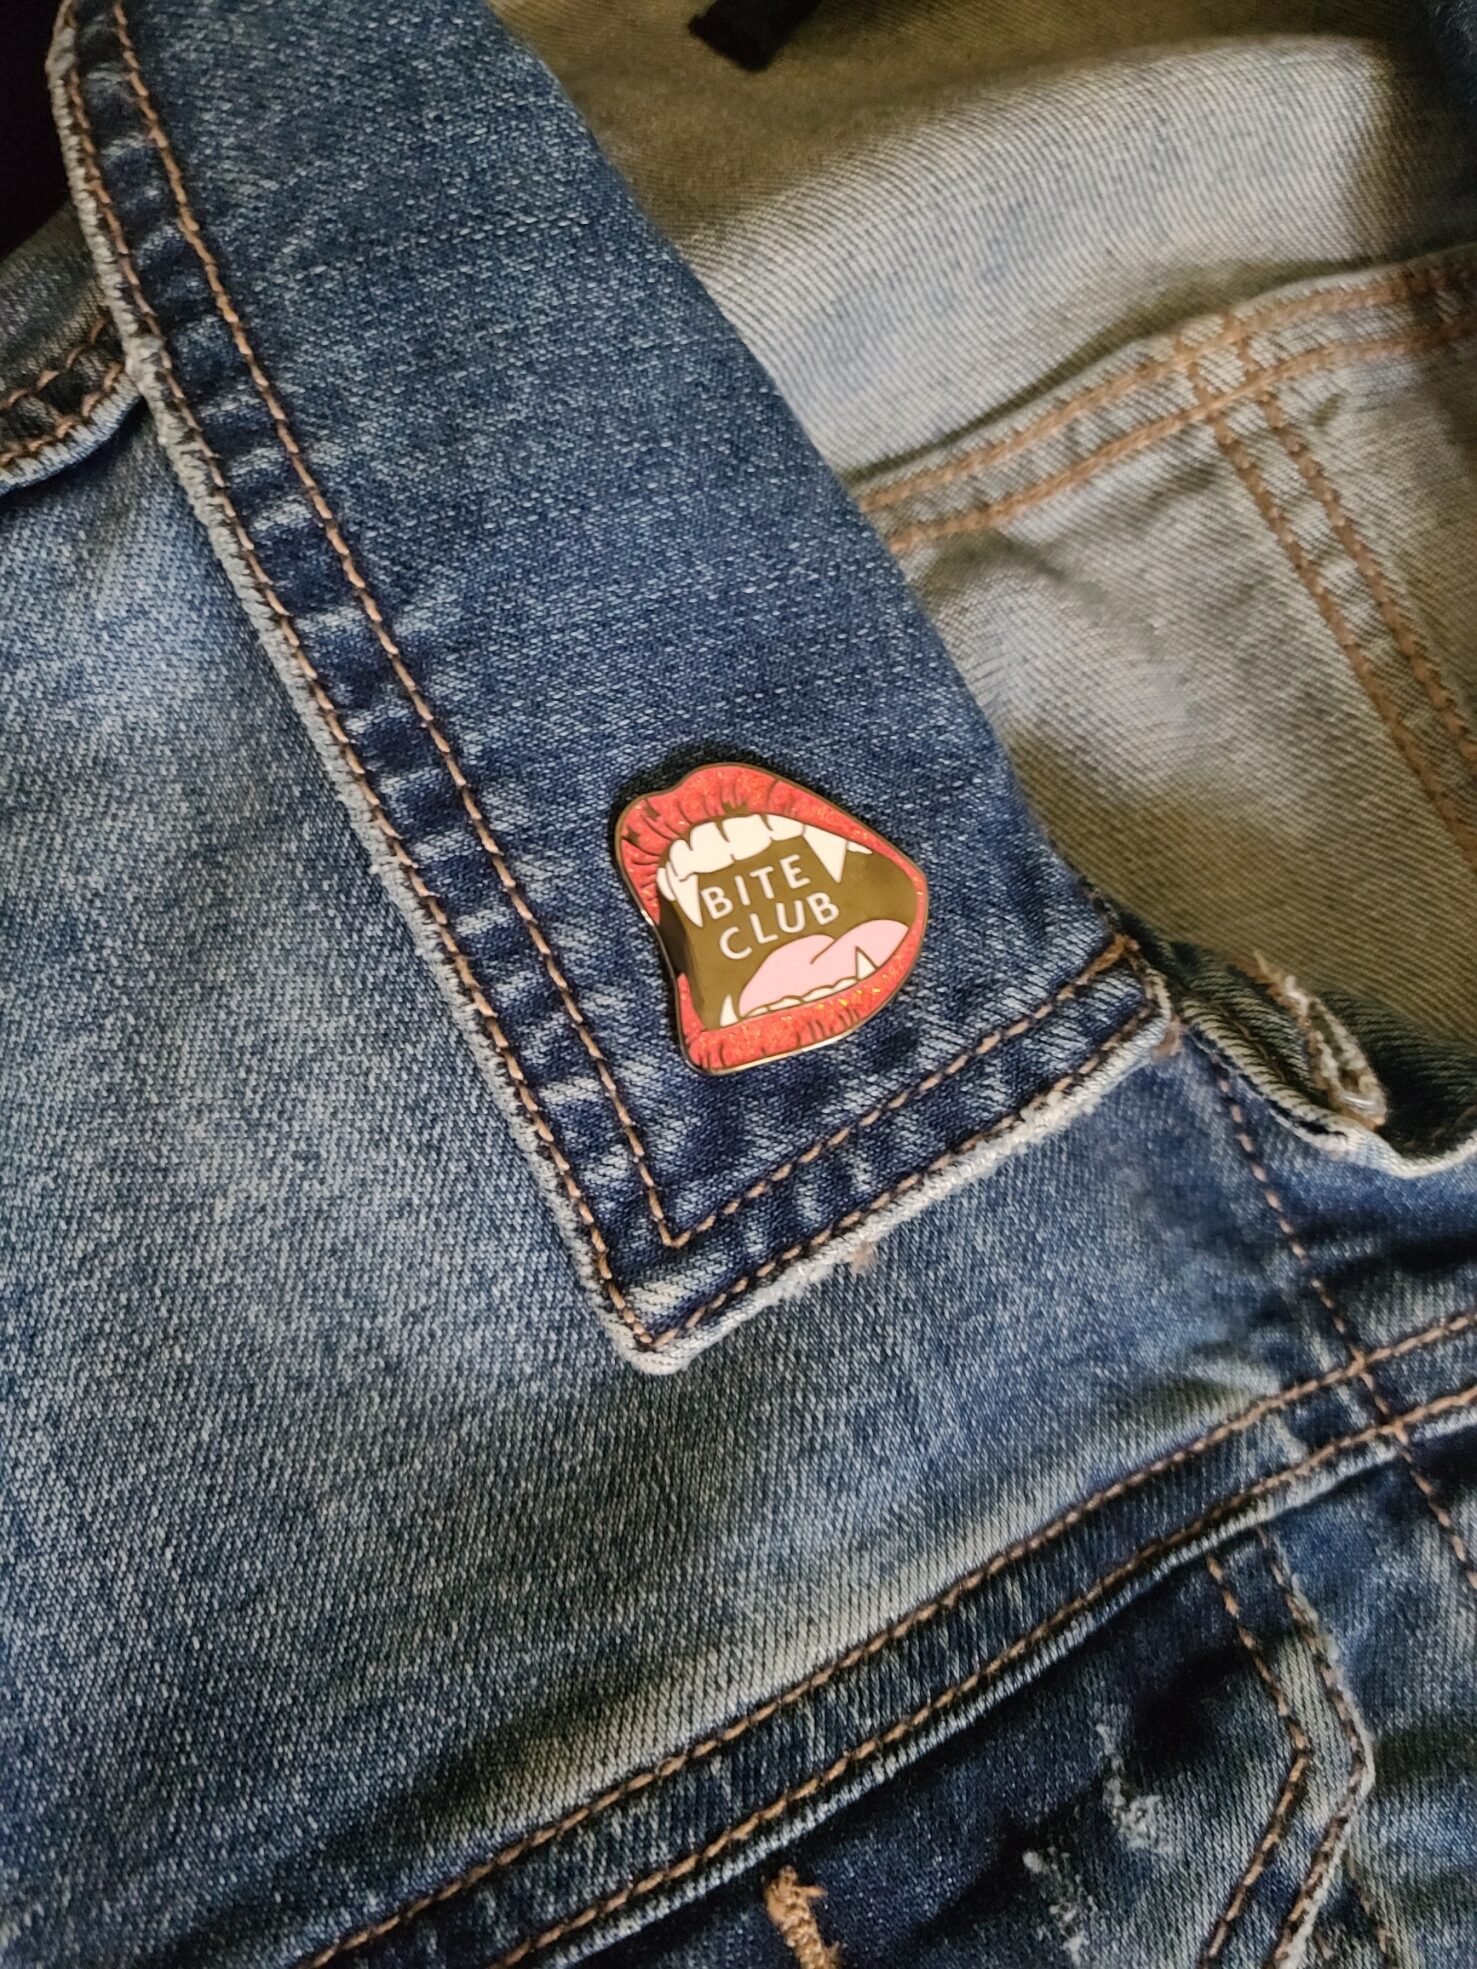 Bite Club pin on jean jacket